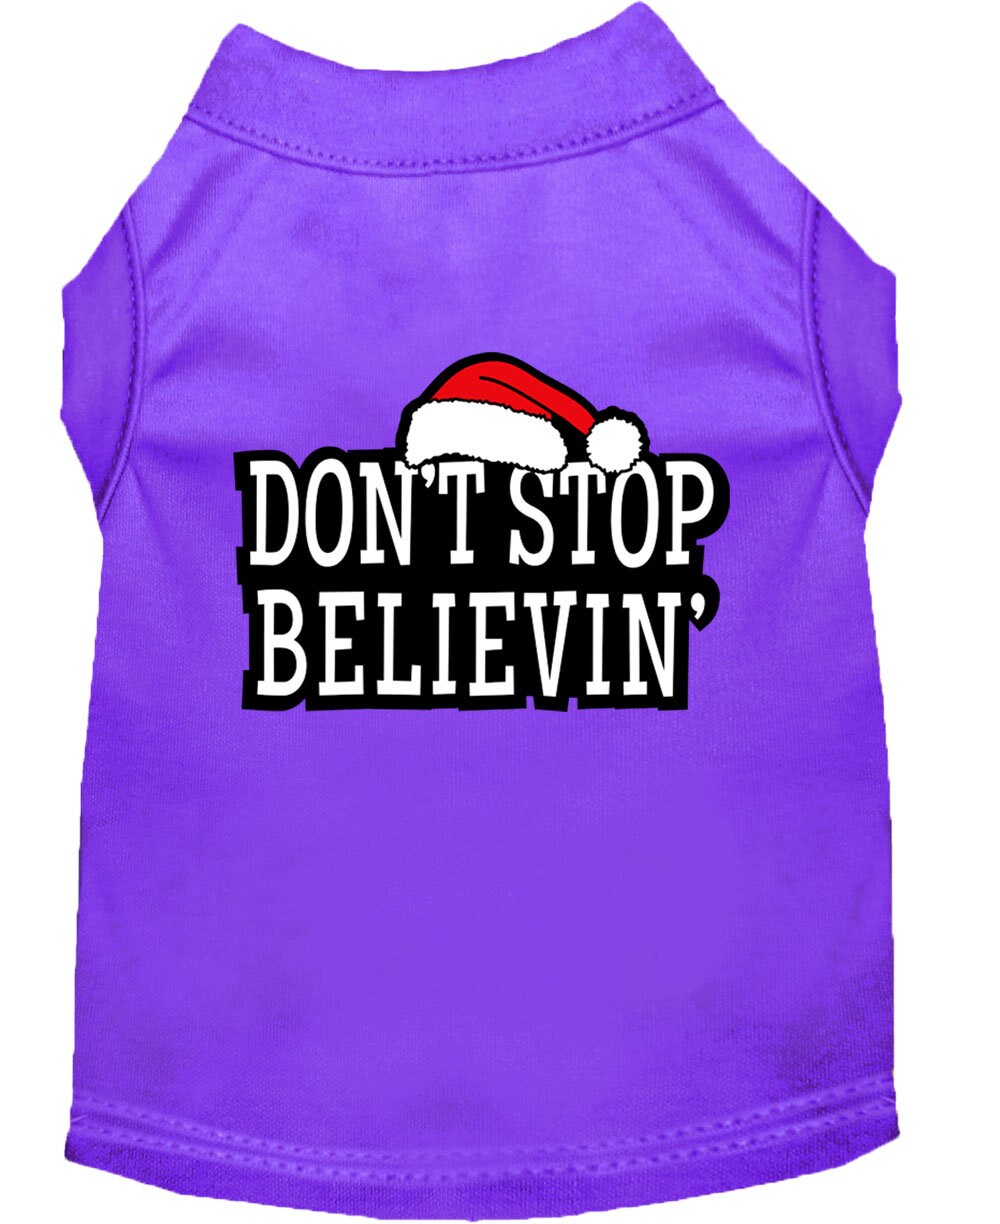 Christmas Screenprinted Dog Shirt, "Don't Stop Believin"